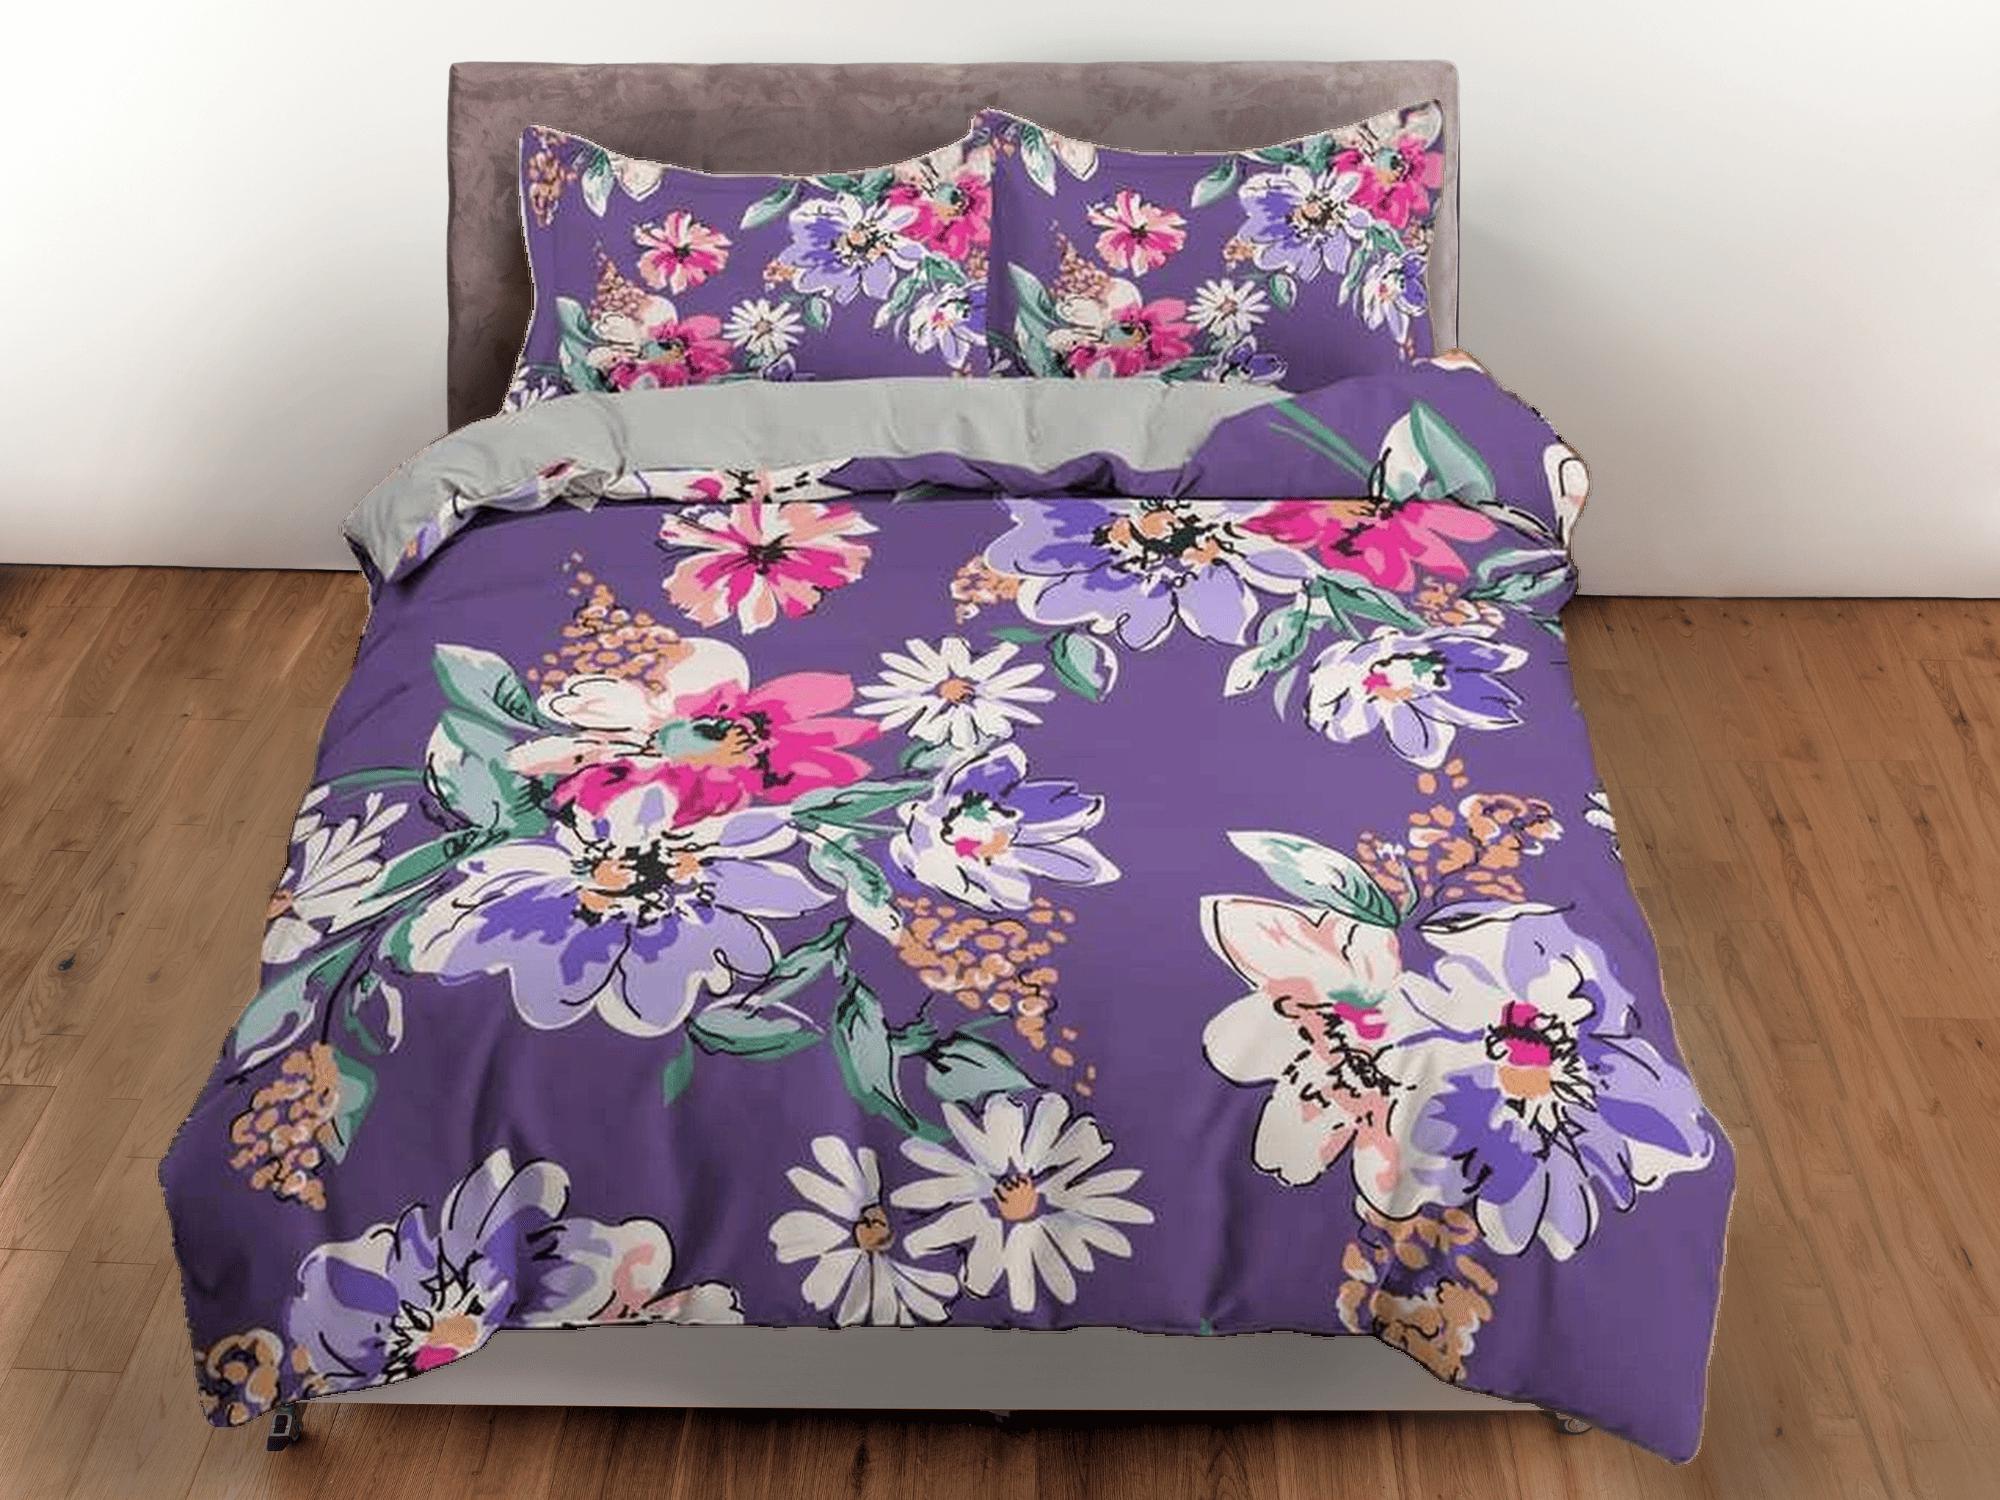 daintyduvet Purple floral duvet cover colorful bedding, teen girl bedroom, baby girl crib bedding boho maximalist aesthetic shabby chic bedding